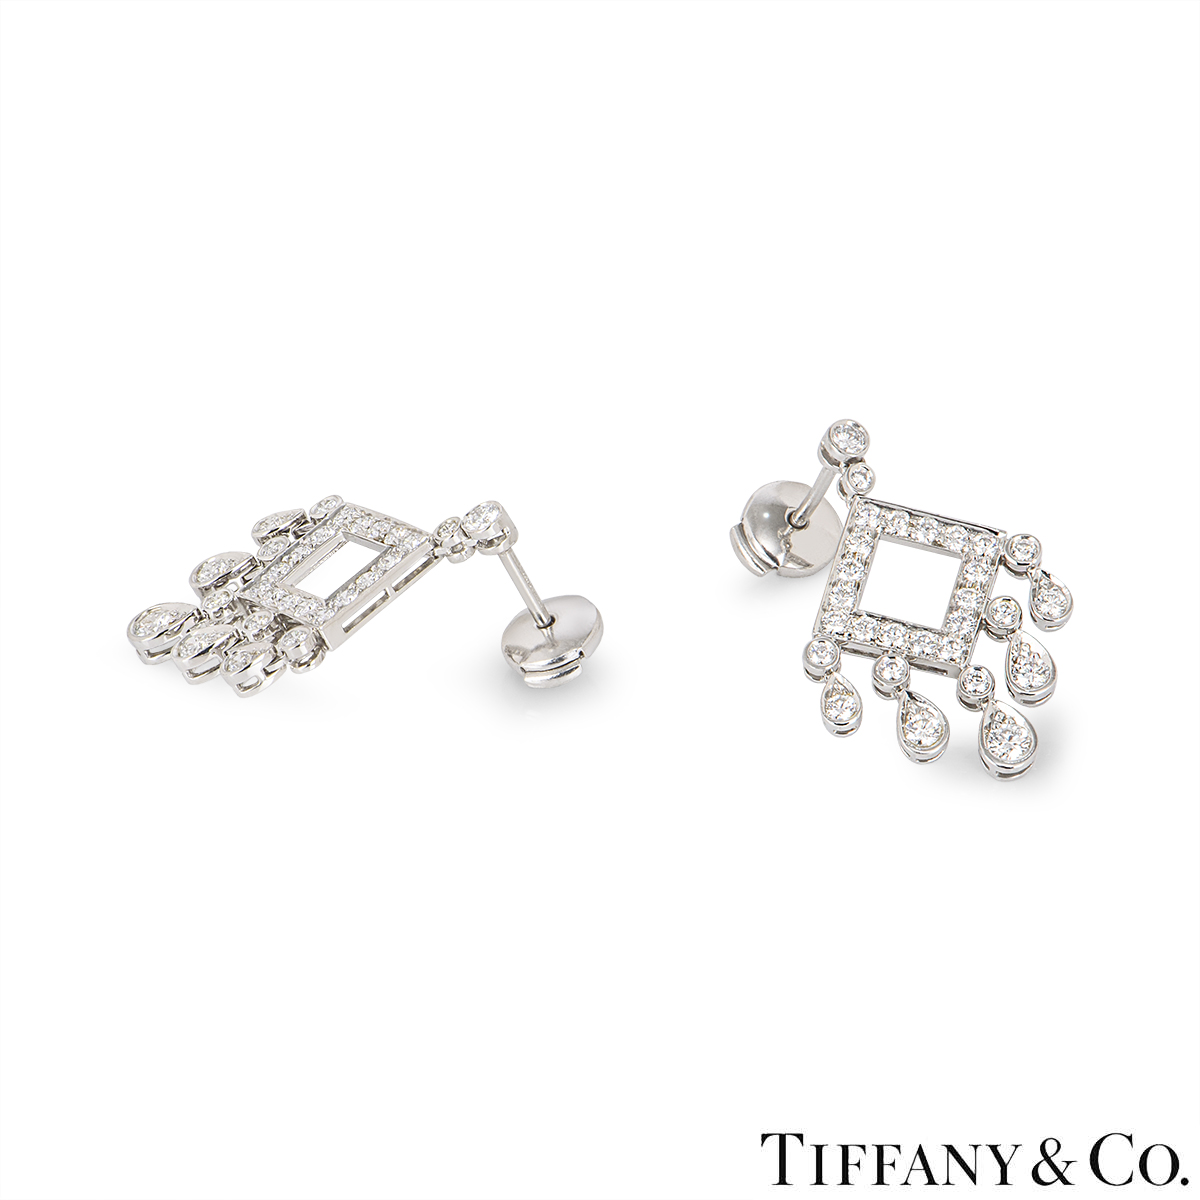 Tiffany & Co. Platinum Diamond Legacy Chandelier Earrings